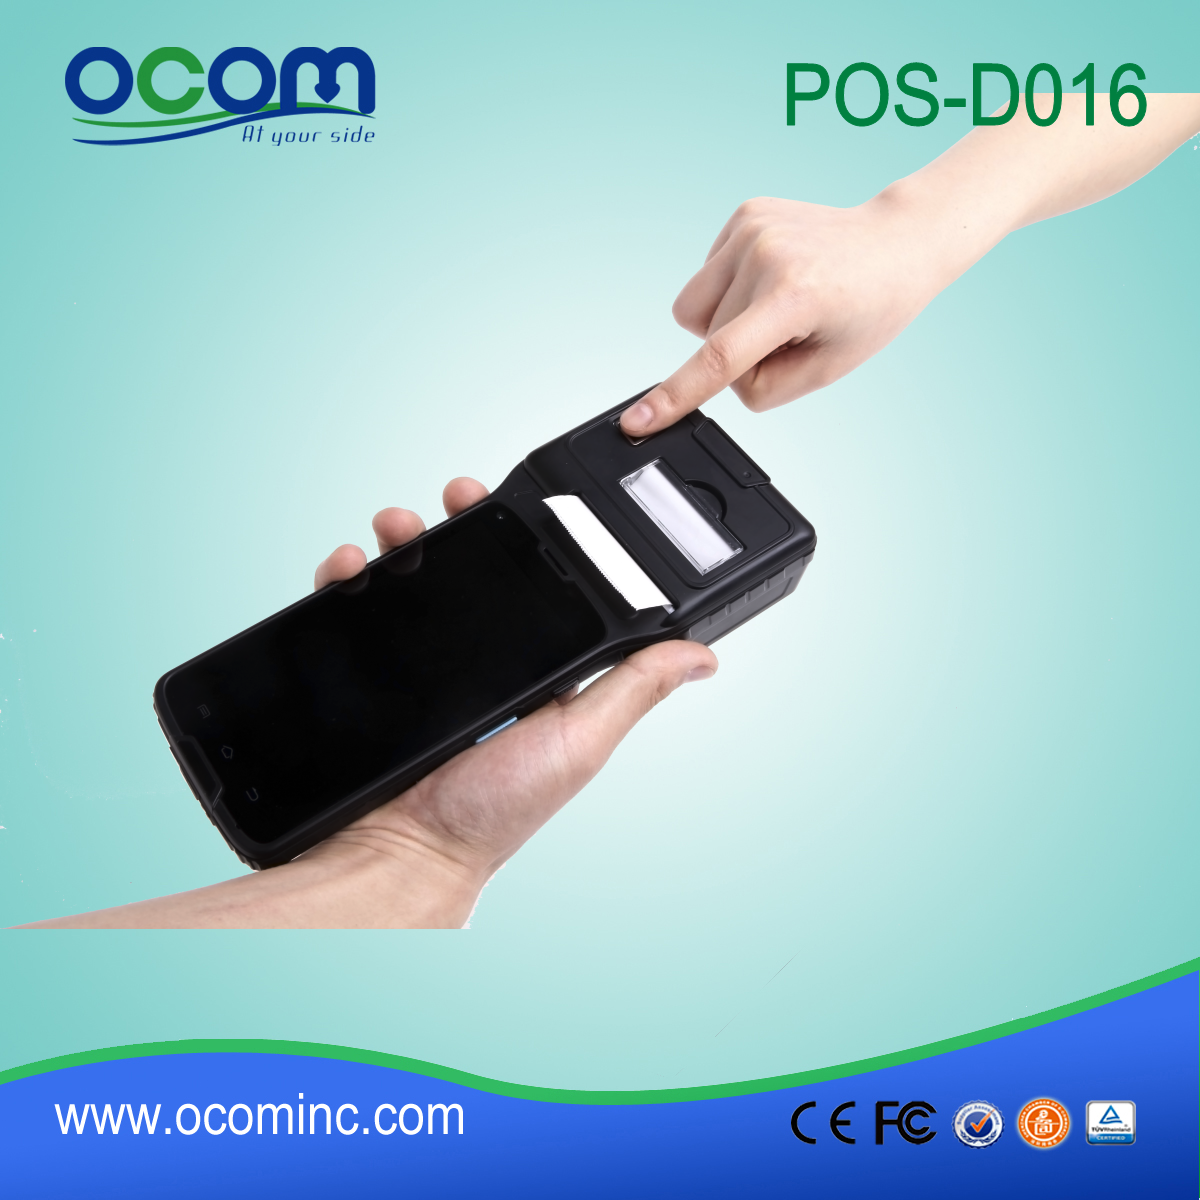 Portable Android 4.2.2 Pos Terminal with Pos Printer--OCBS-D016